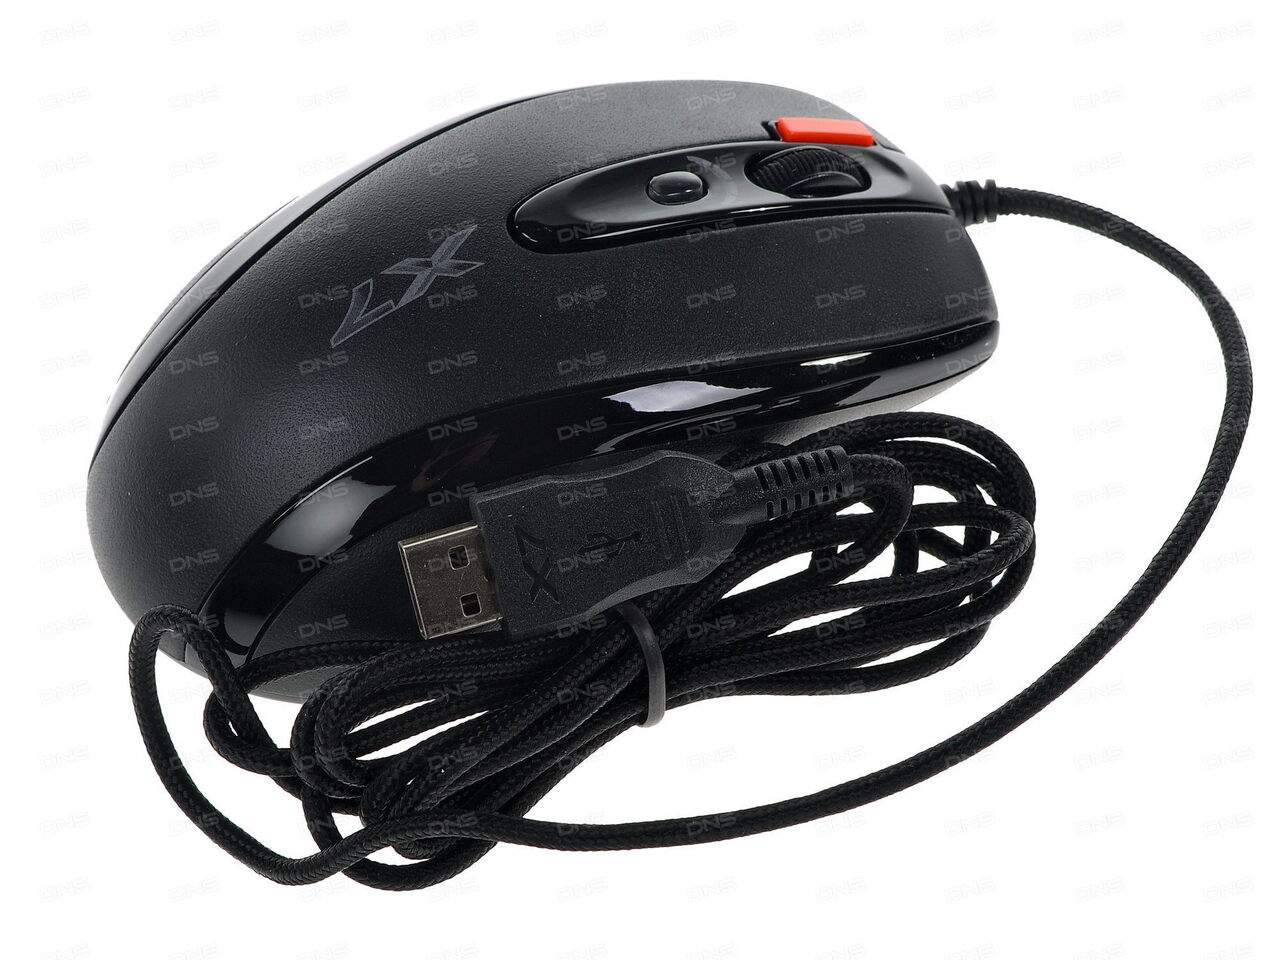 Мышь a4tech x-710bk, черный